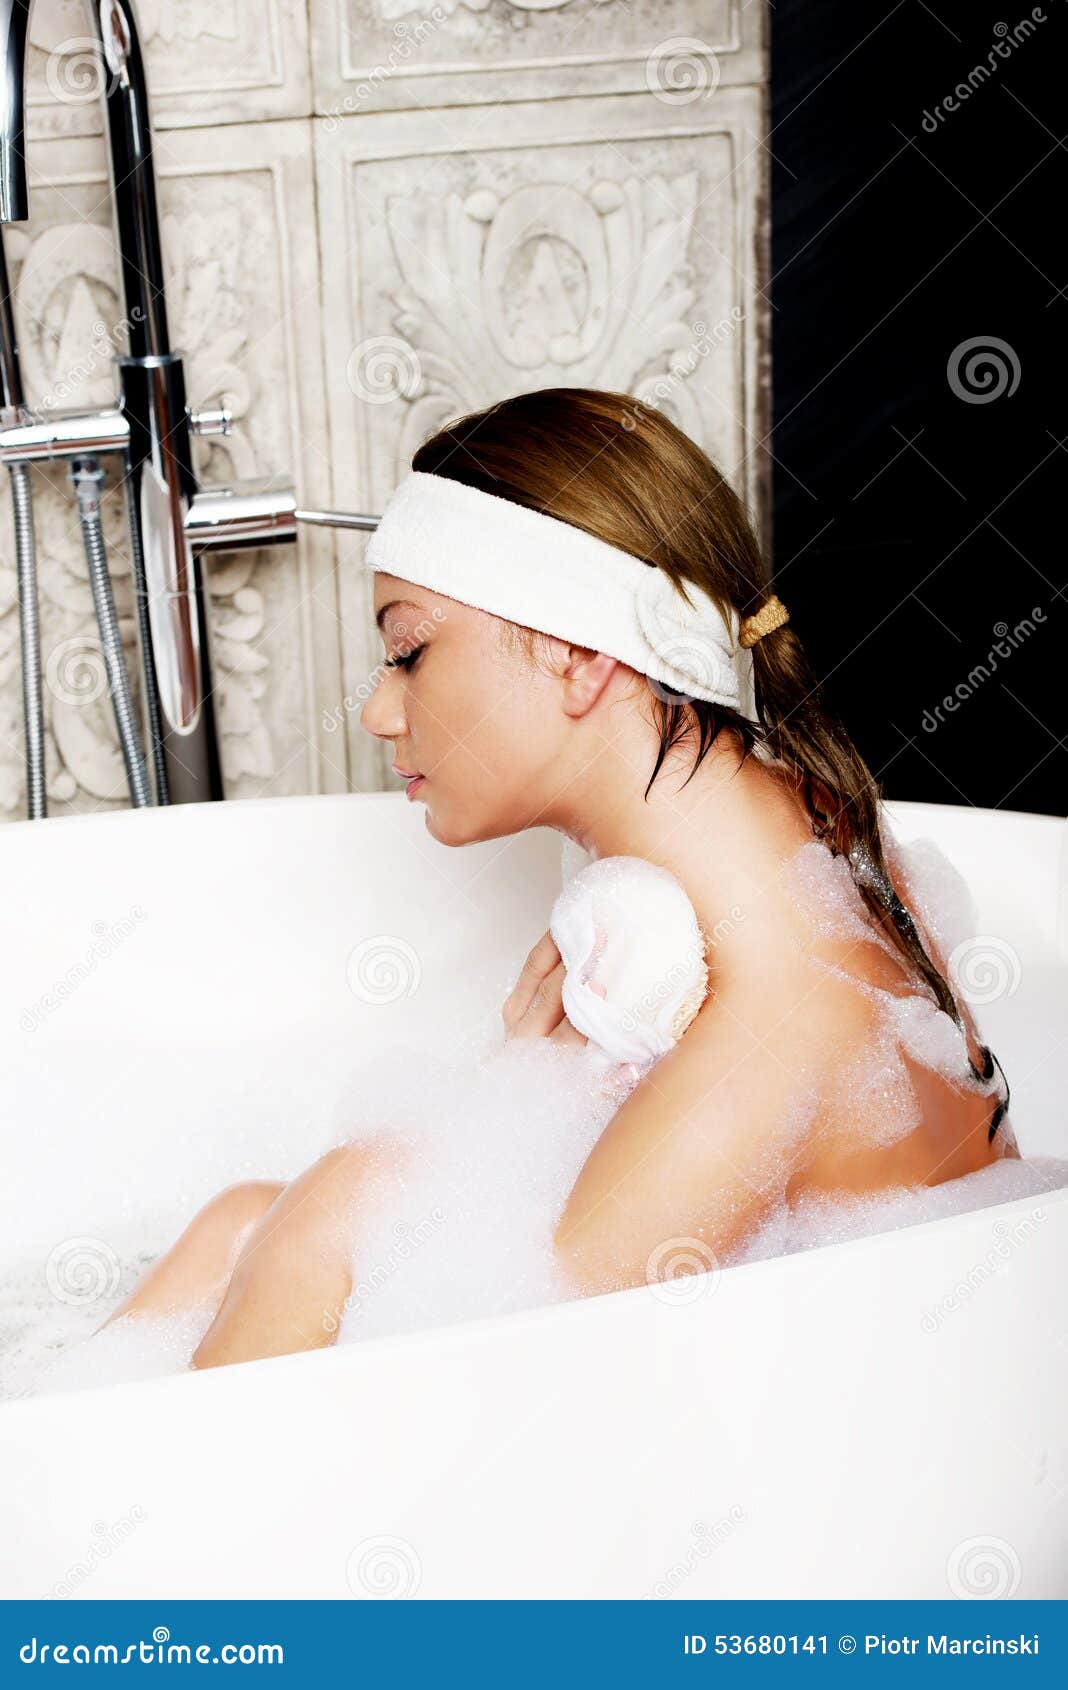 homemade teen bathing herself